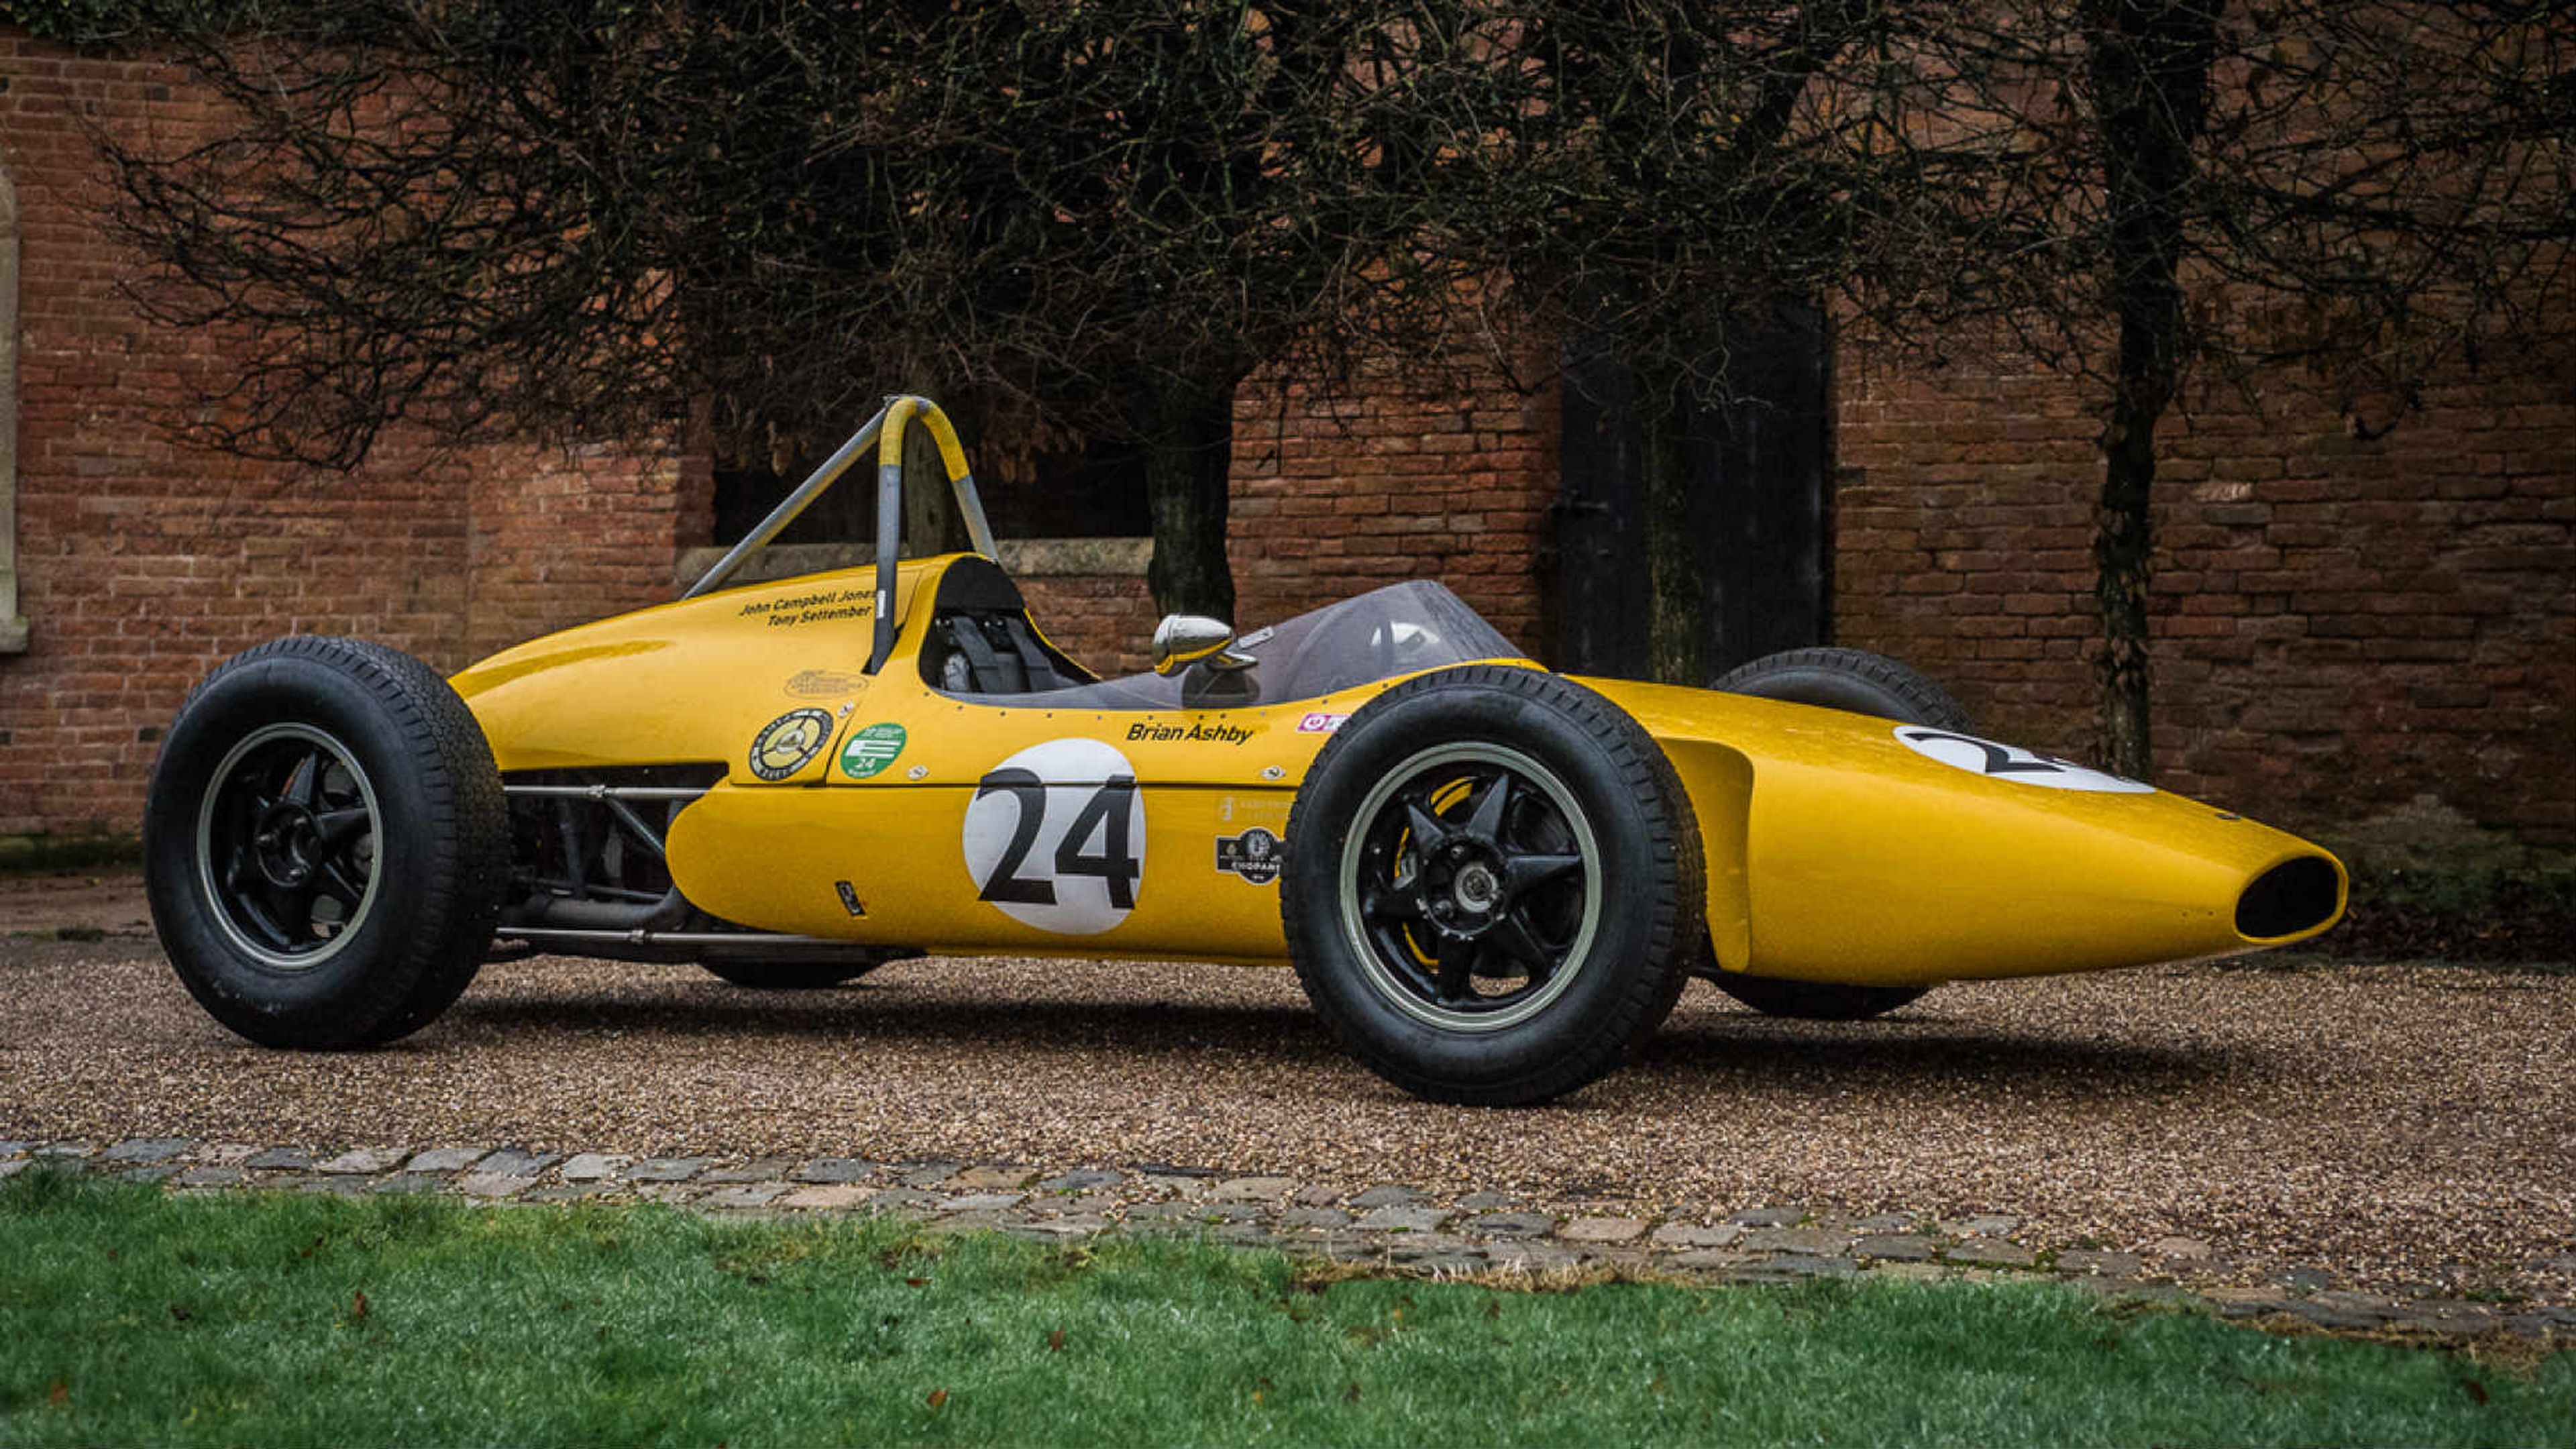 Emeryson Formula 1 Climax FPF de 1961 (Precio estimado de 175.000 a 210.000 euros)